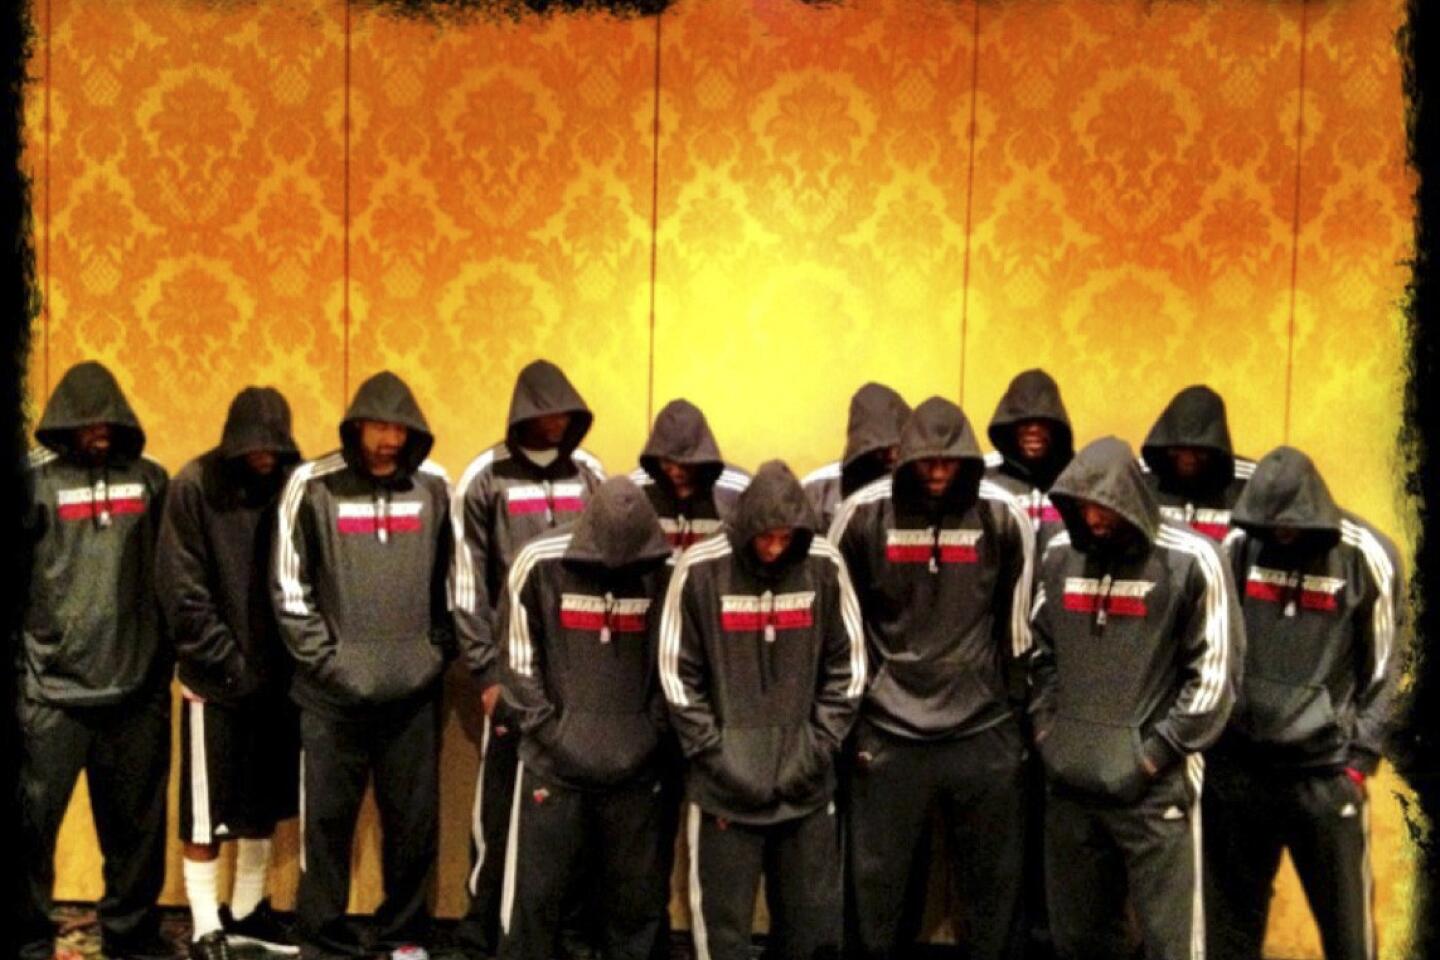 Miami Heat in hoodies